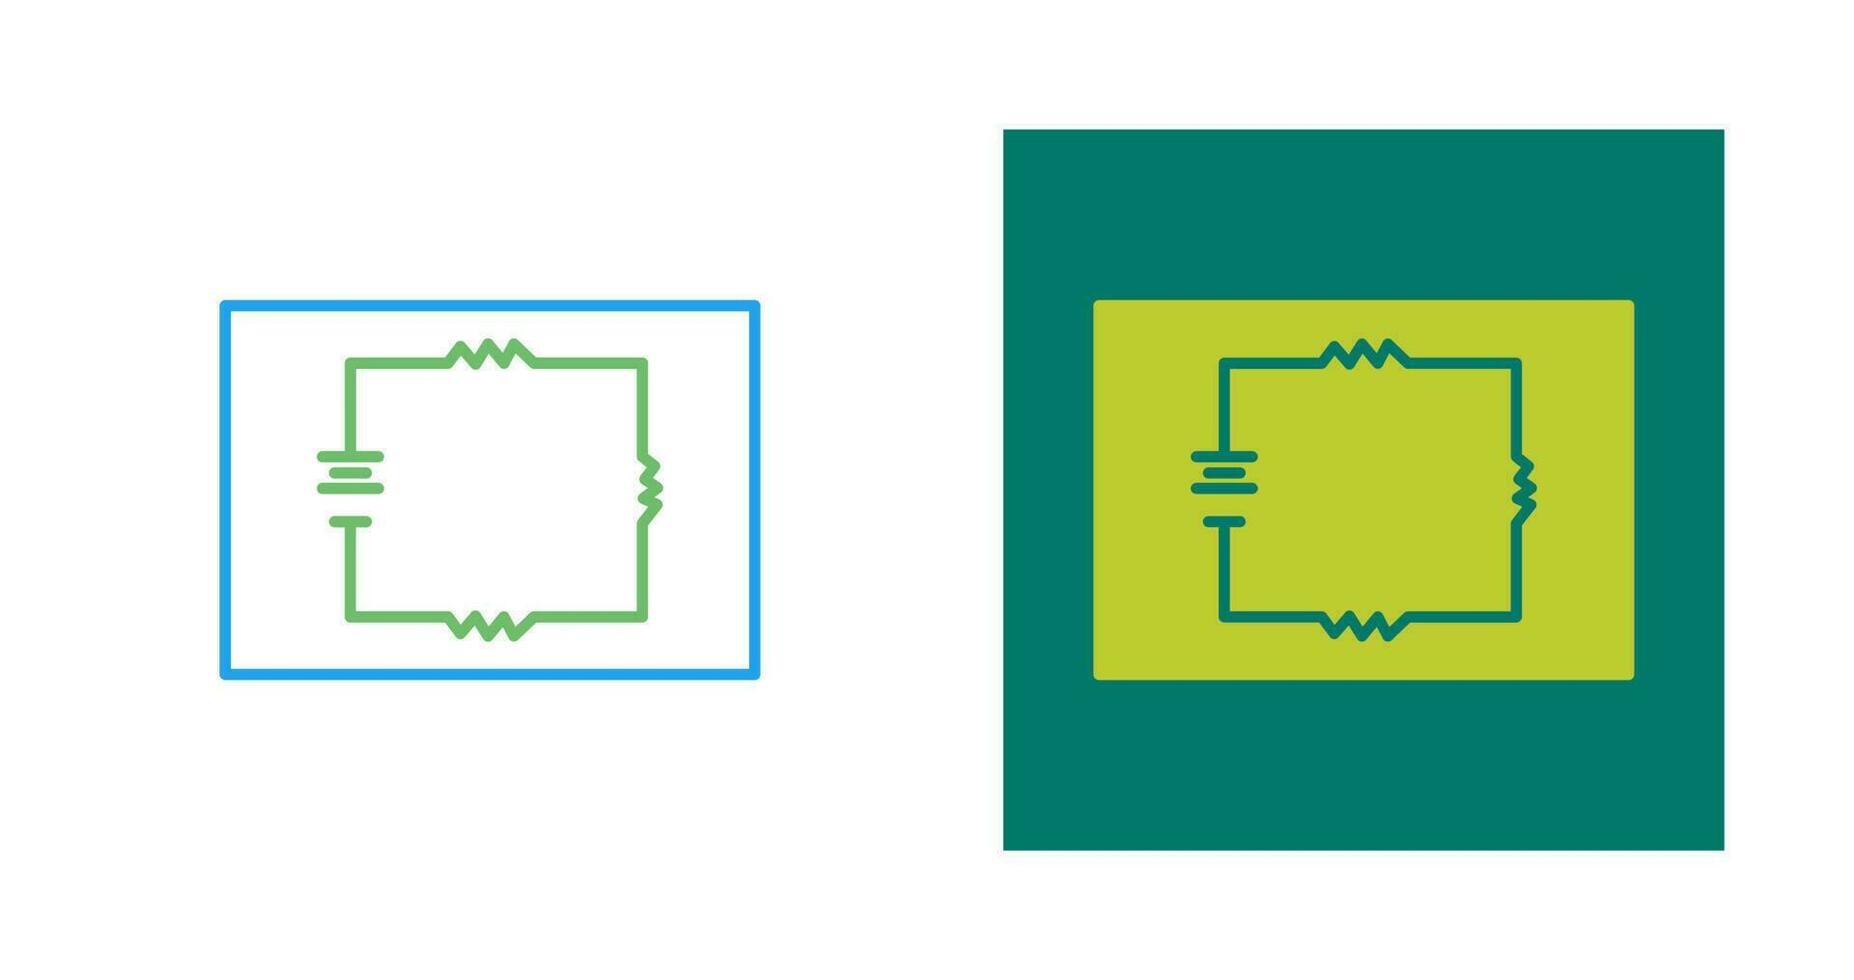 icono de vector de circuito